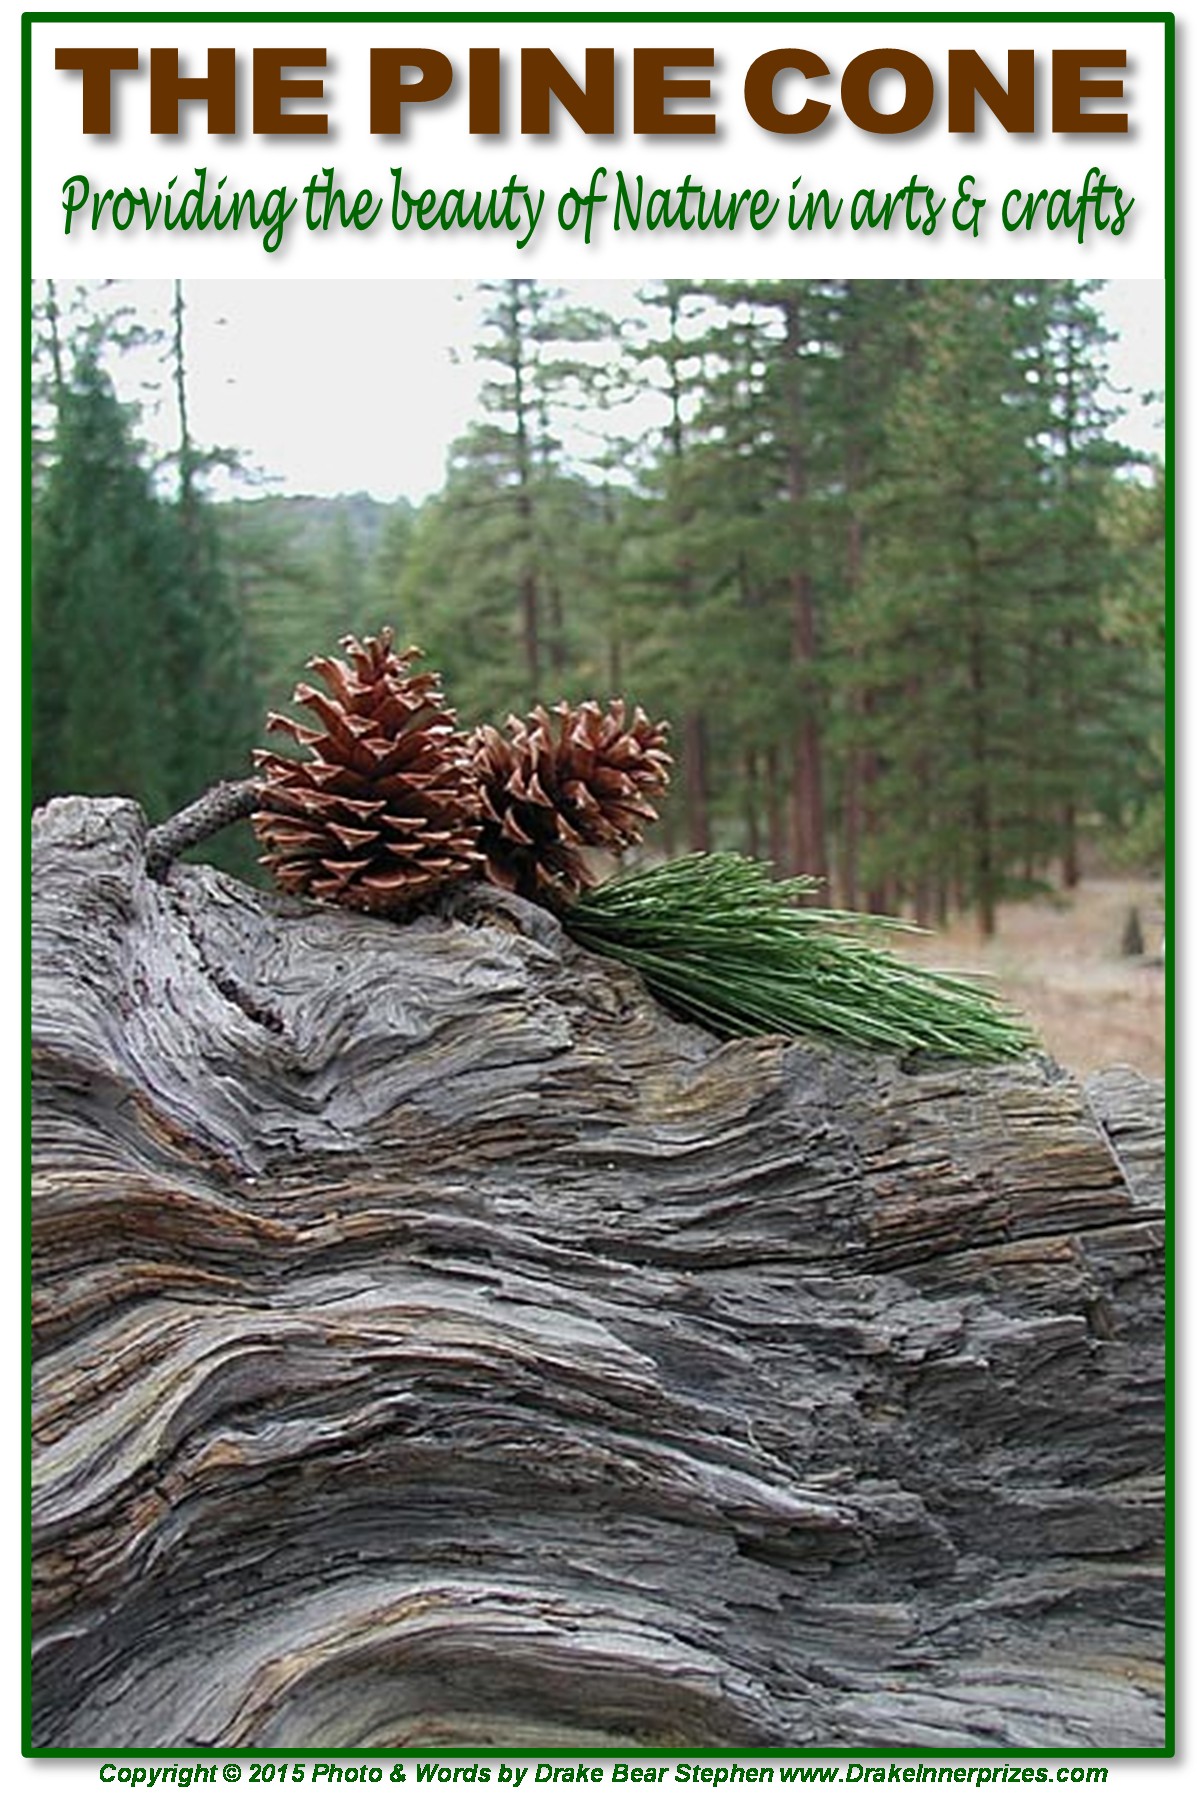 Dreams About Gathering Pine Cones